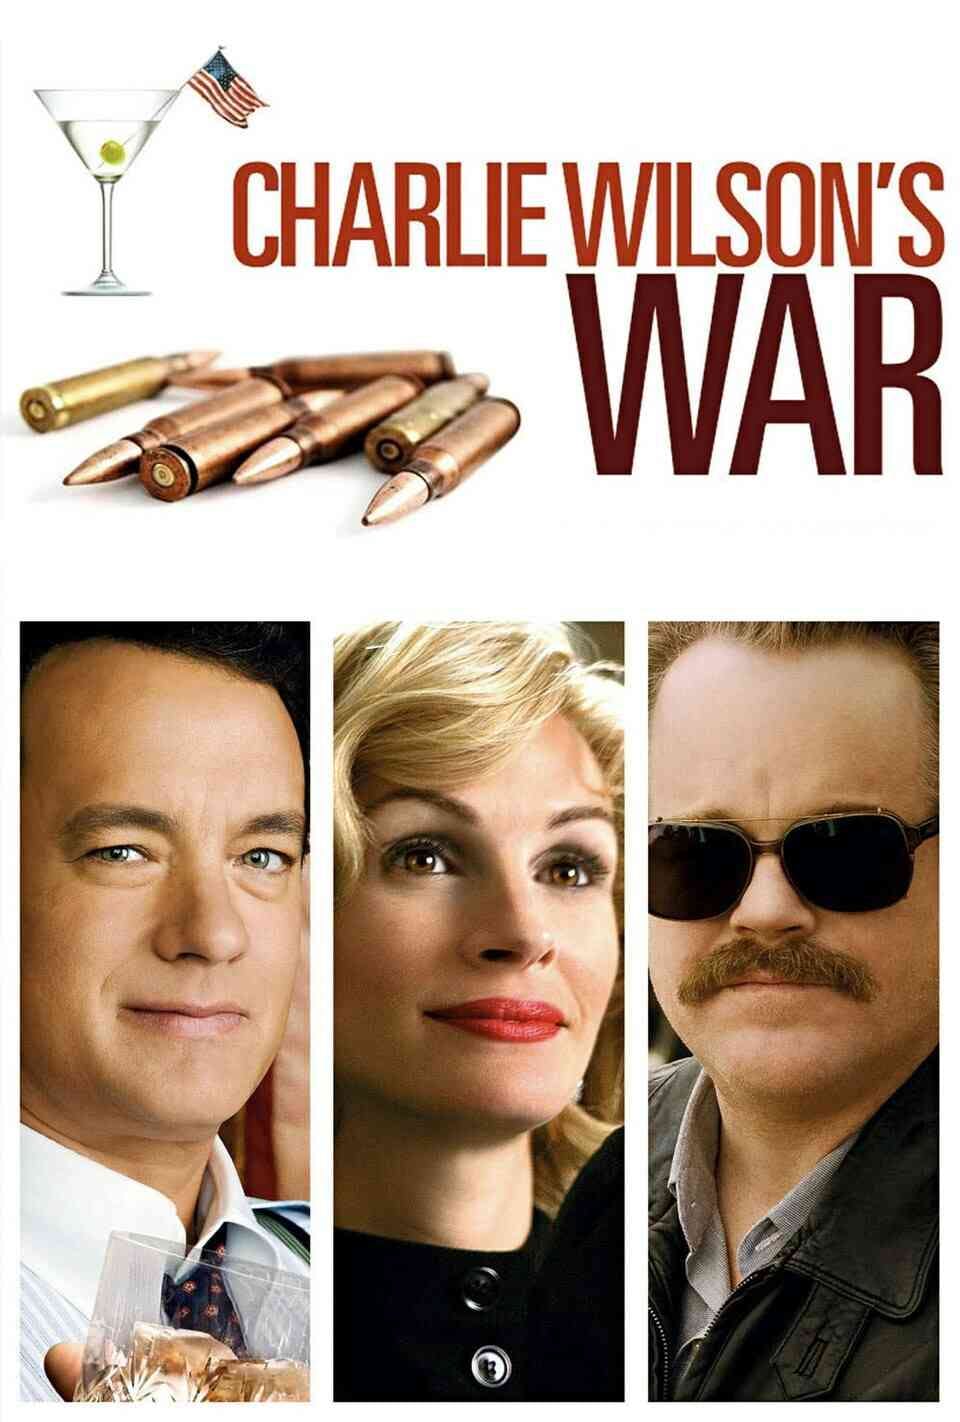 Read Charlie Wilson's War screenplay (poster)